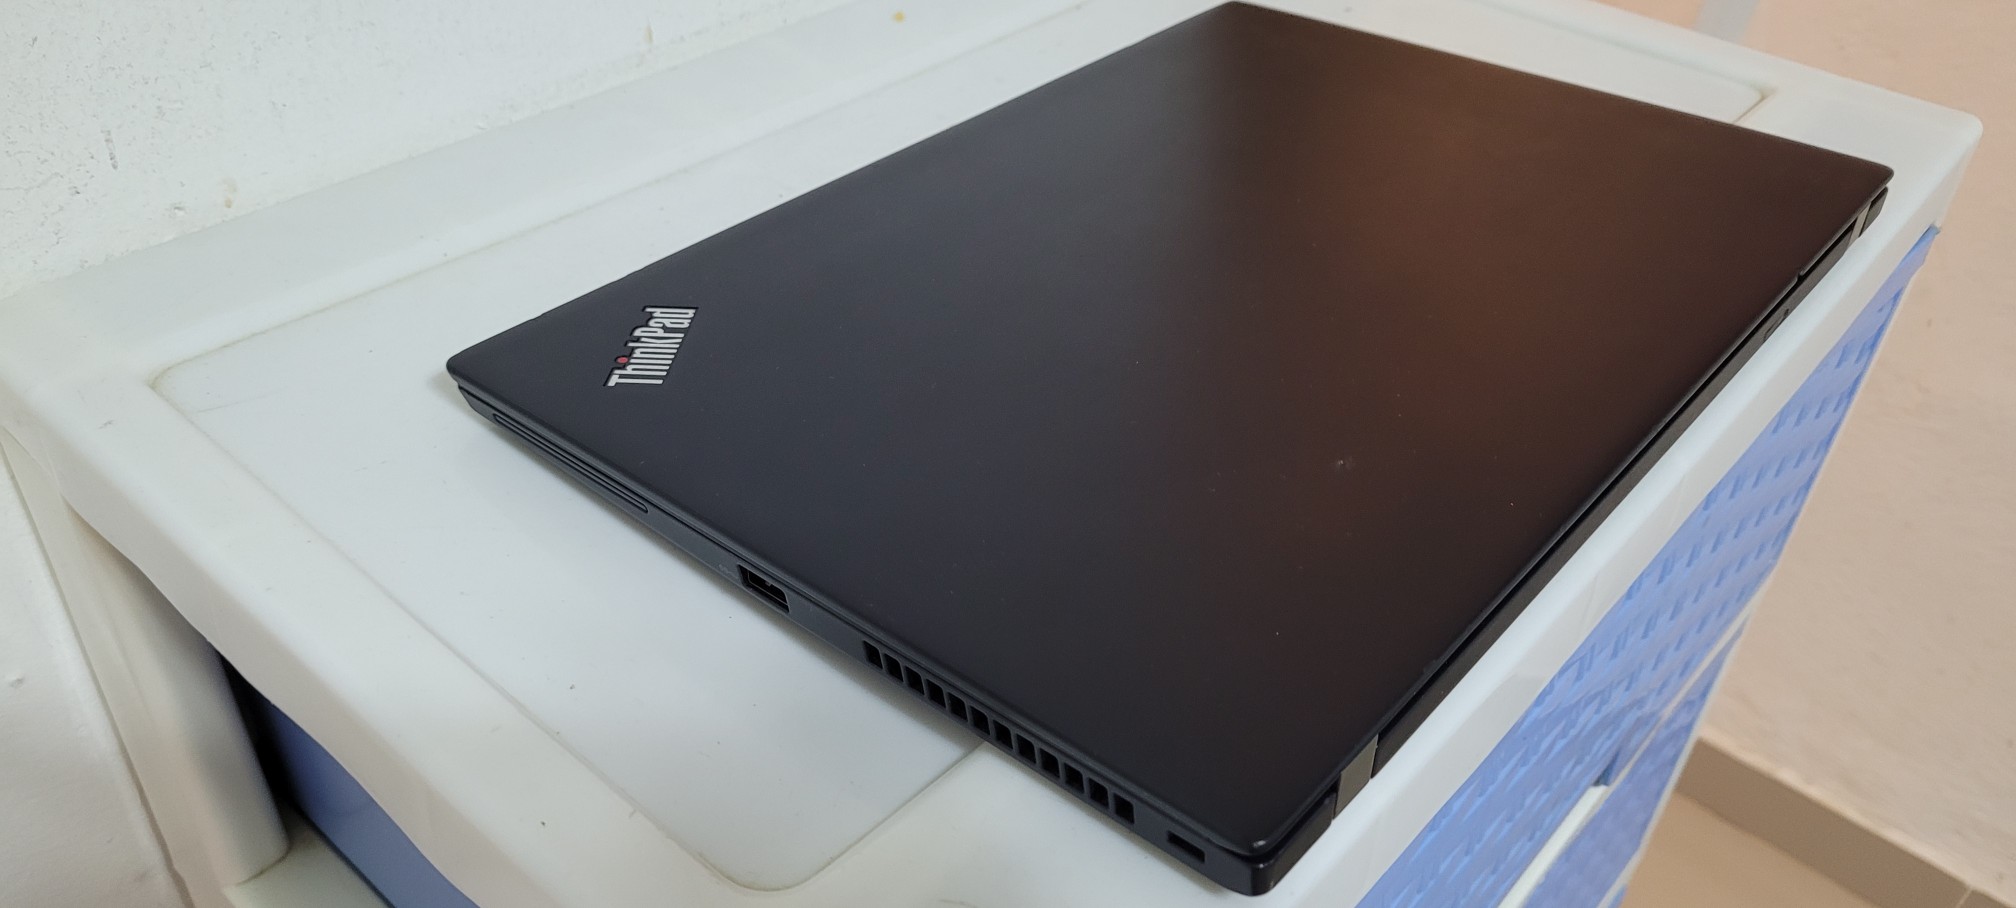 computadoras y laptops - lenovo T480 14 Pulg Core i5 8va Ram 8gb ddr4 Disco 256gb SSD Solido 2